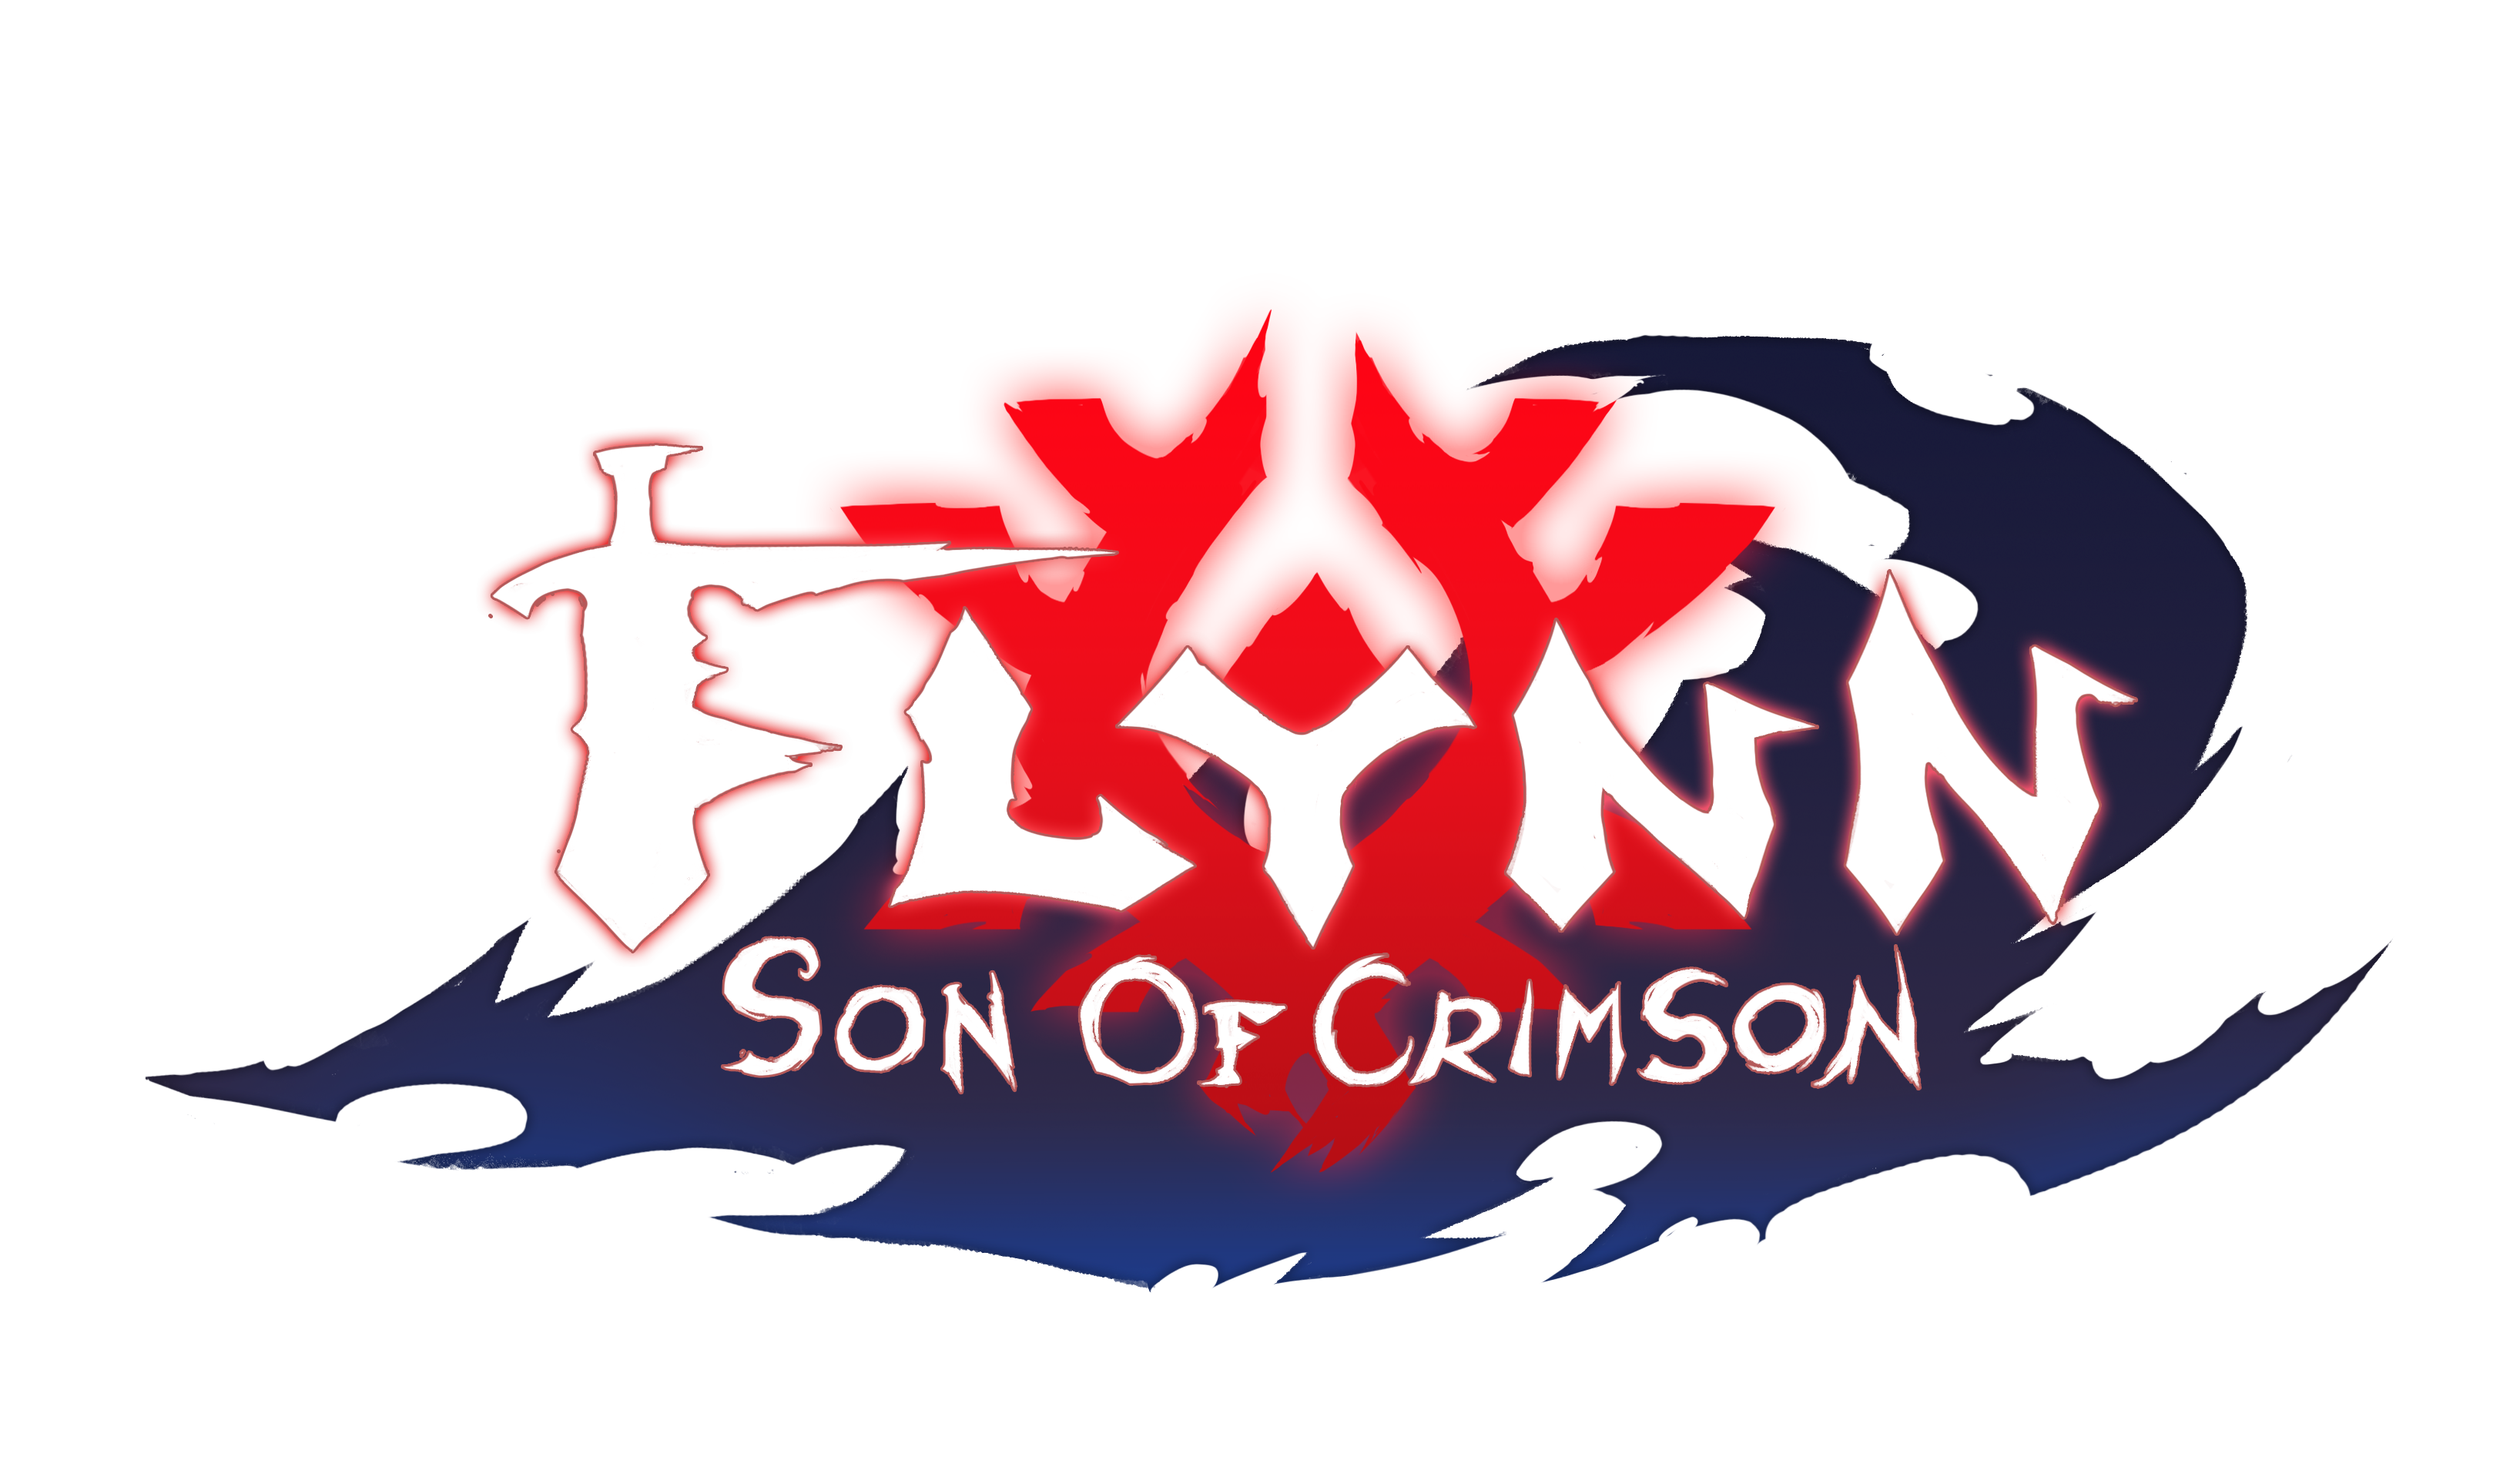 PS4 Copies of Flynn on Sale NOW! — Studio Thunderhorse